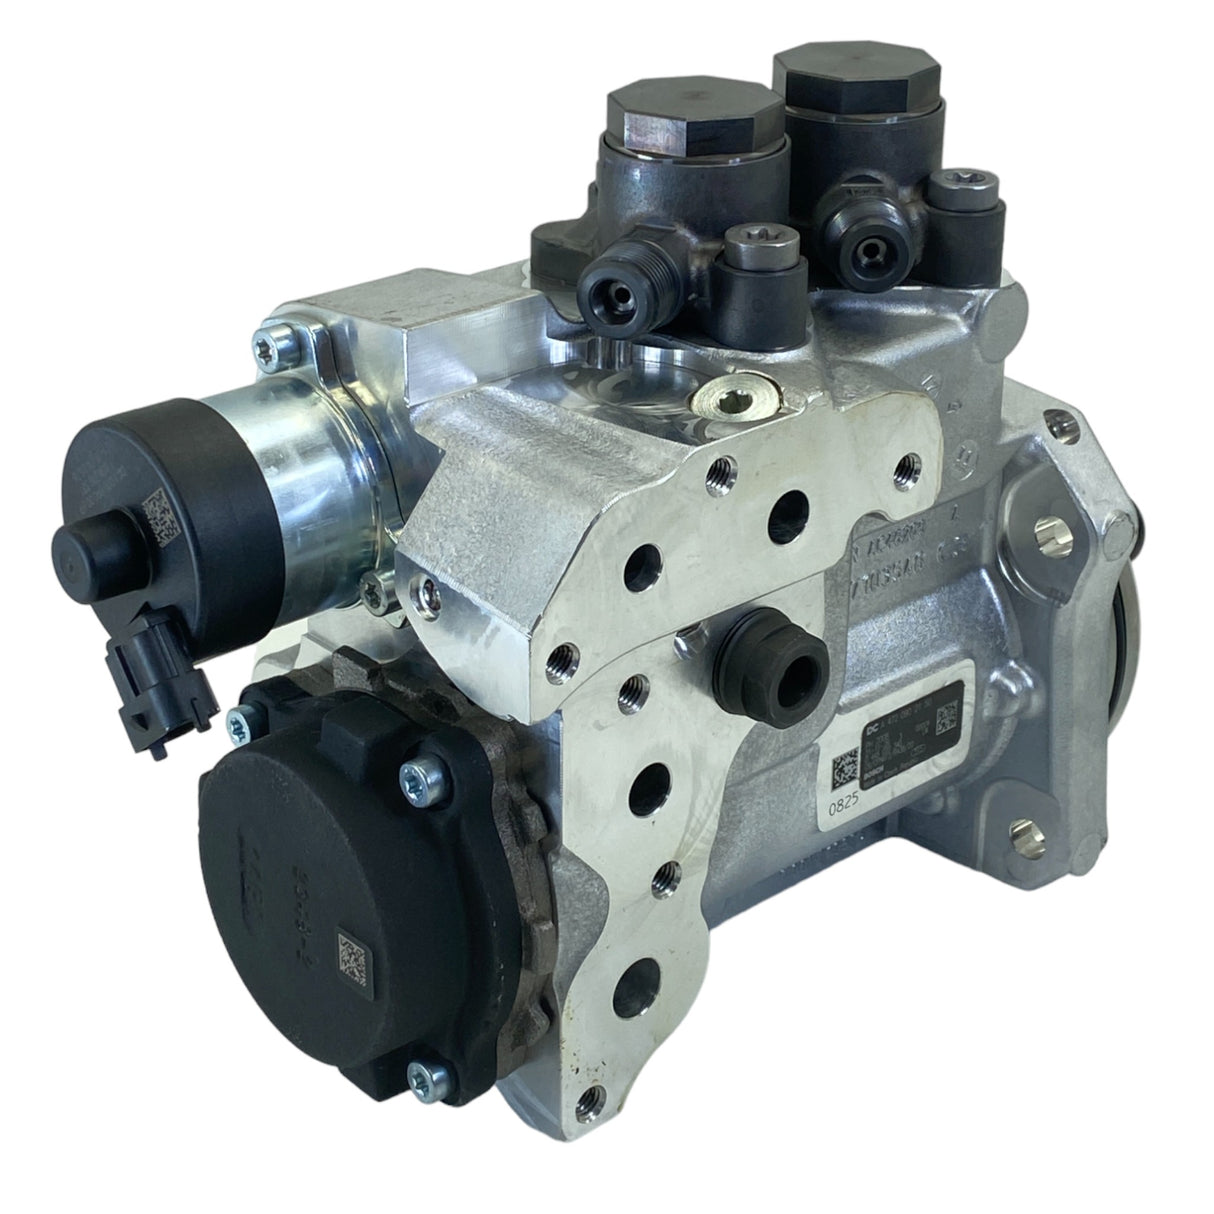 A4720902150 Genuine Detroit Diesel Fuel Injection Pump